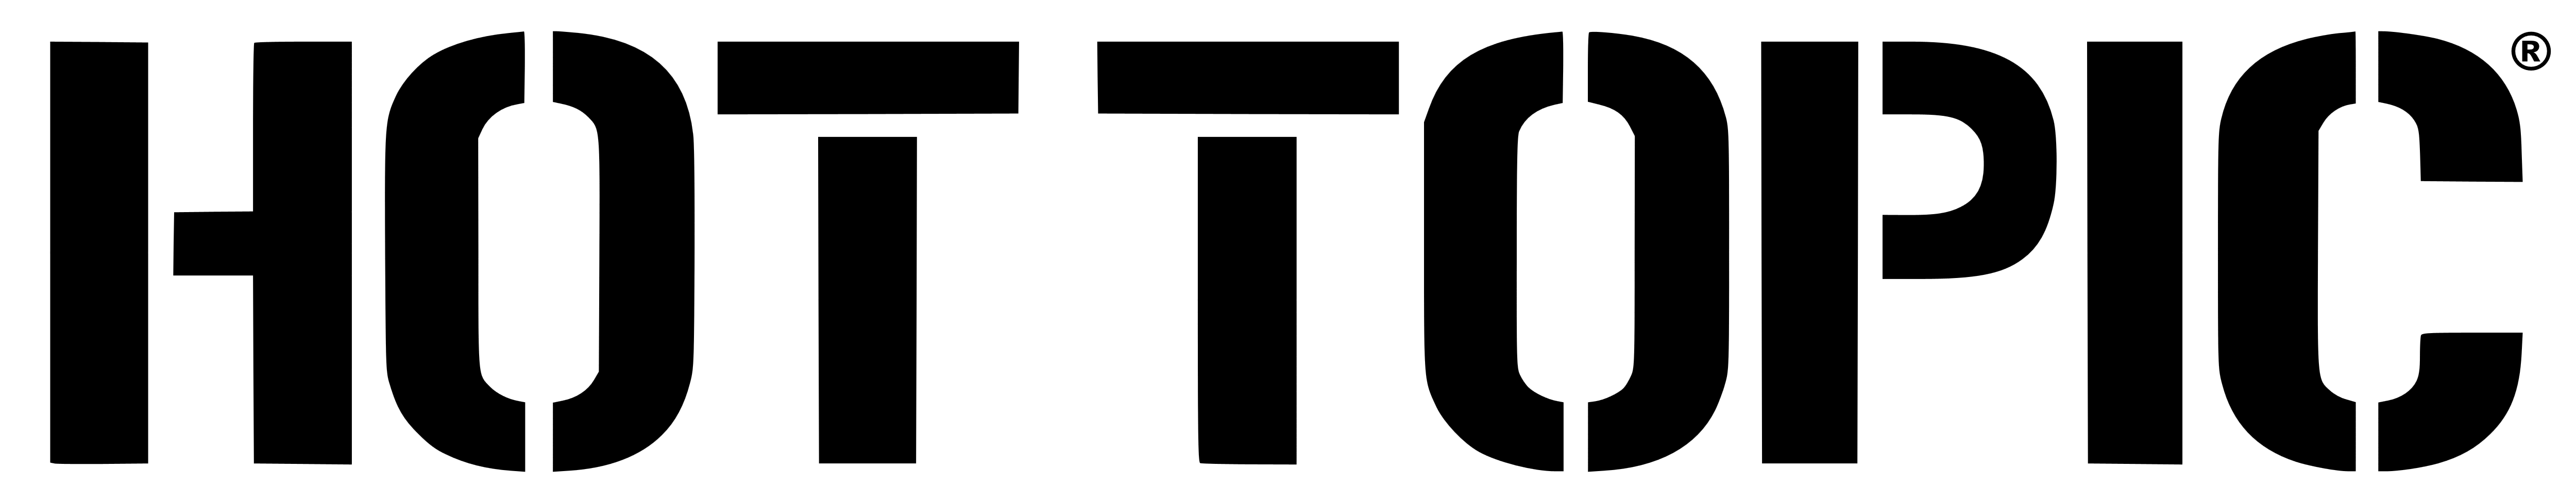 Topic Logo - Hot Topic – Logos Download